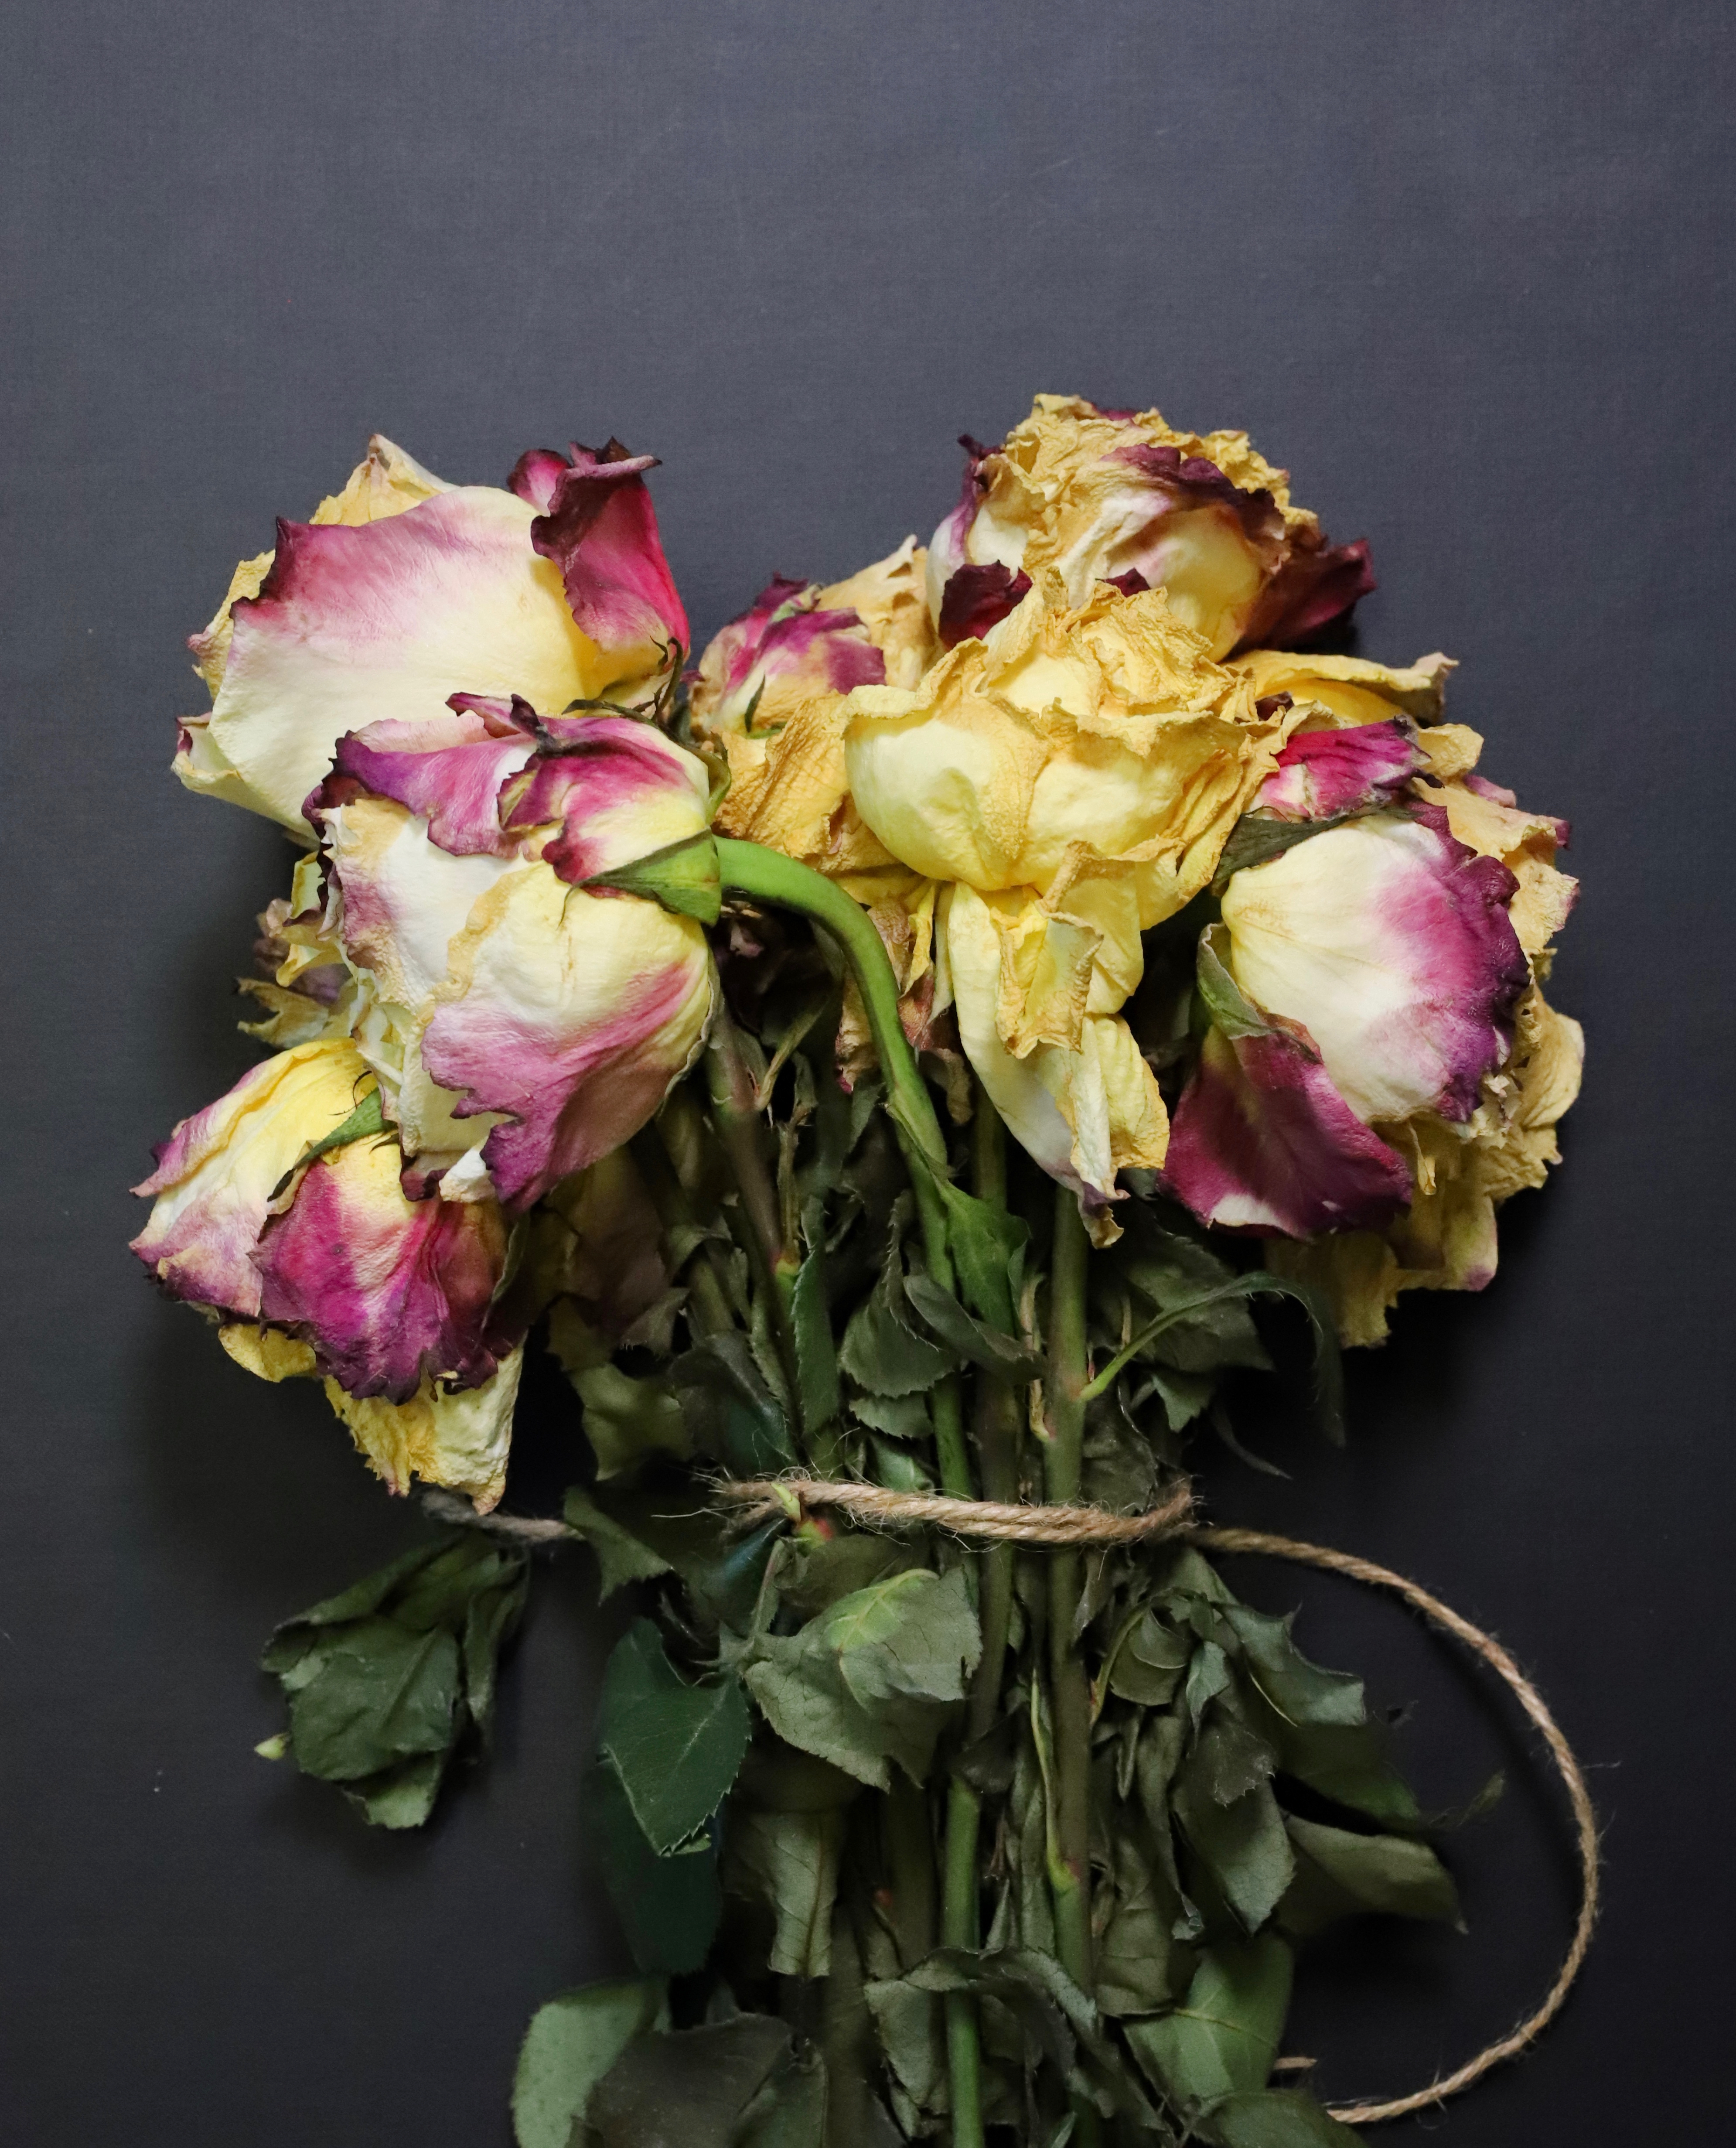 Leon Capetanos - Tied Roses 1/10 - photo - 15 x 10